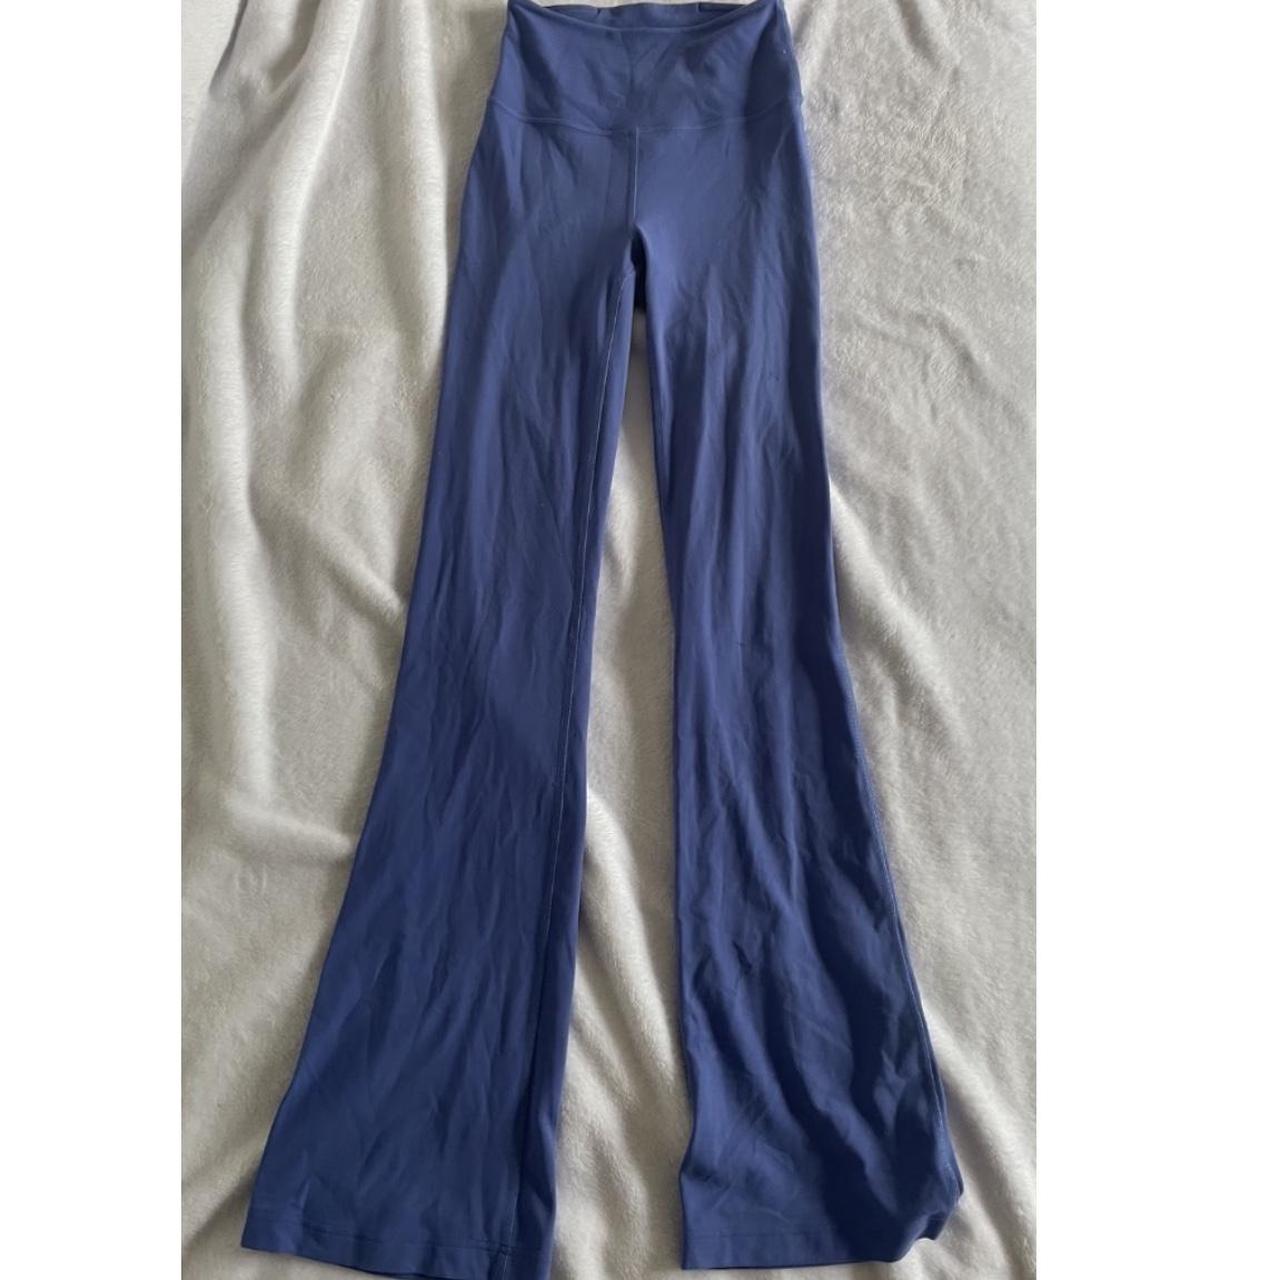 Bayleaf Yoga Pants Large Very good condition. New - Depop